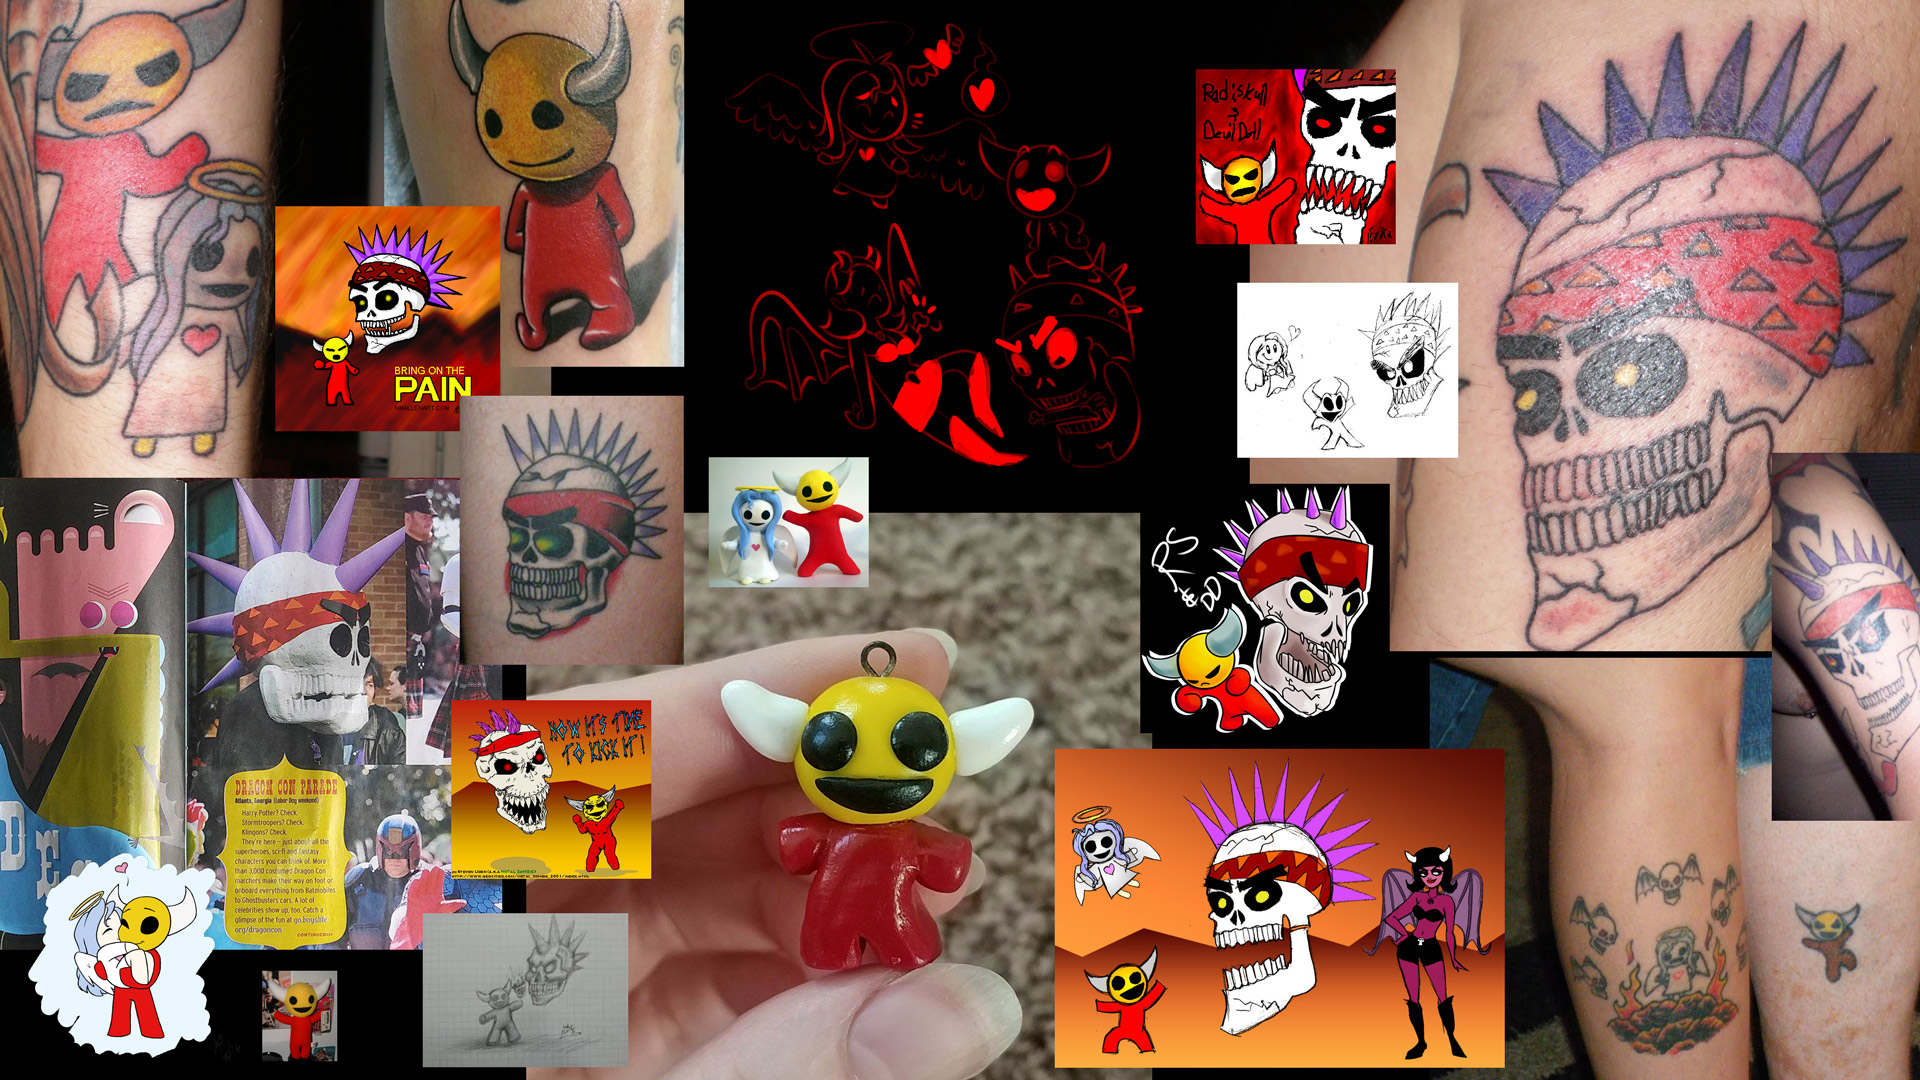 amazing Radiskull Devil Doll fan art at tattoos